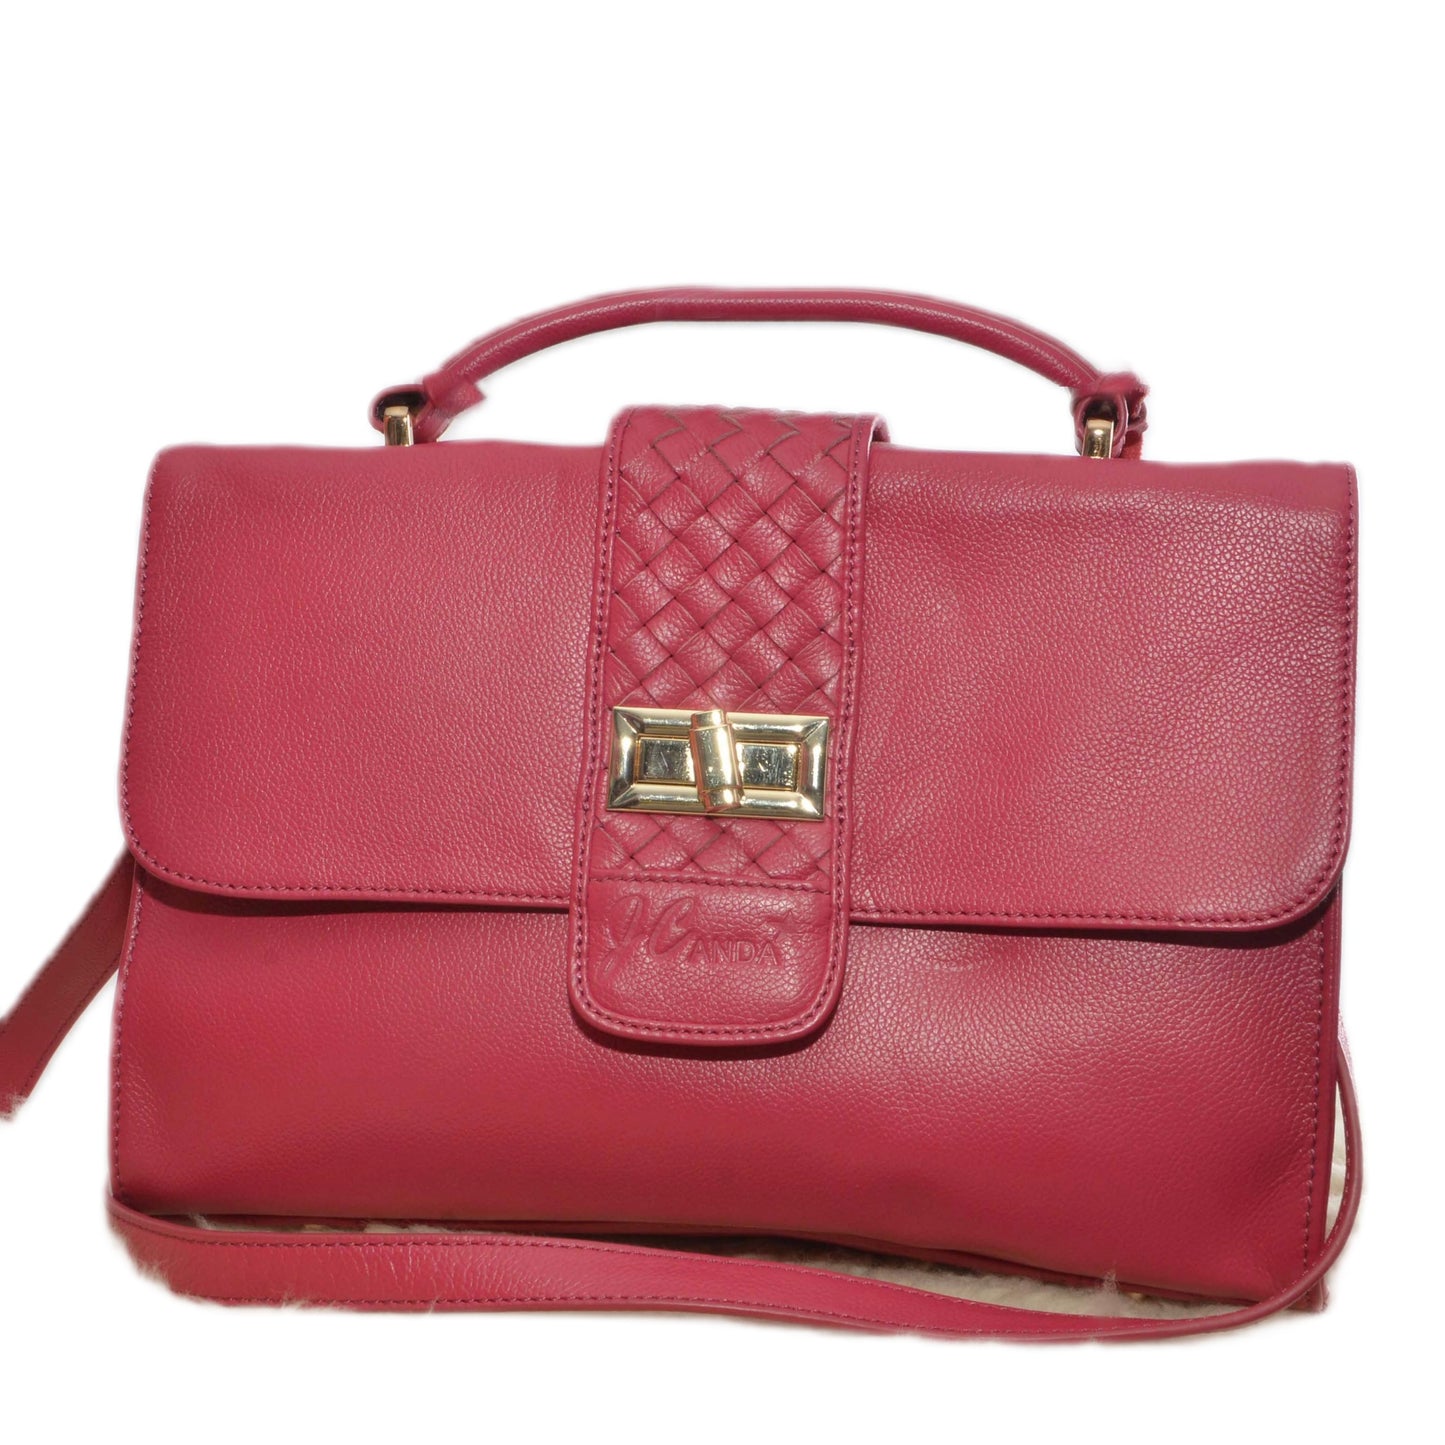 JCAnda Leather Handbag: Classic Dreamer